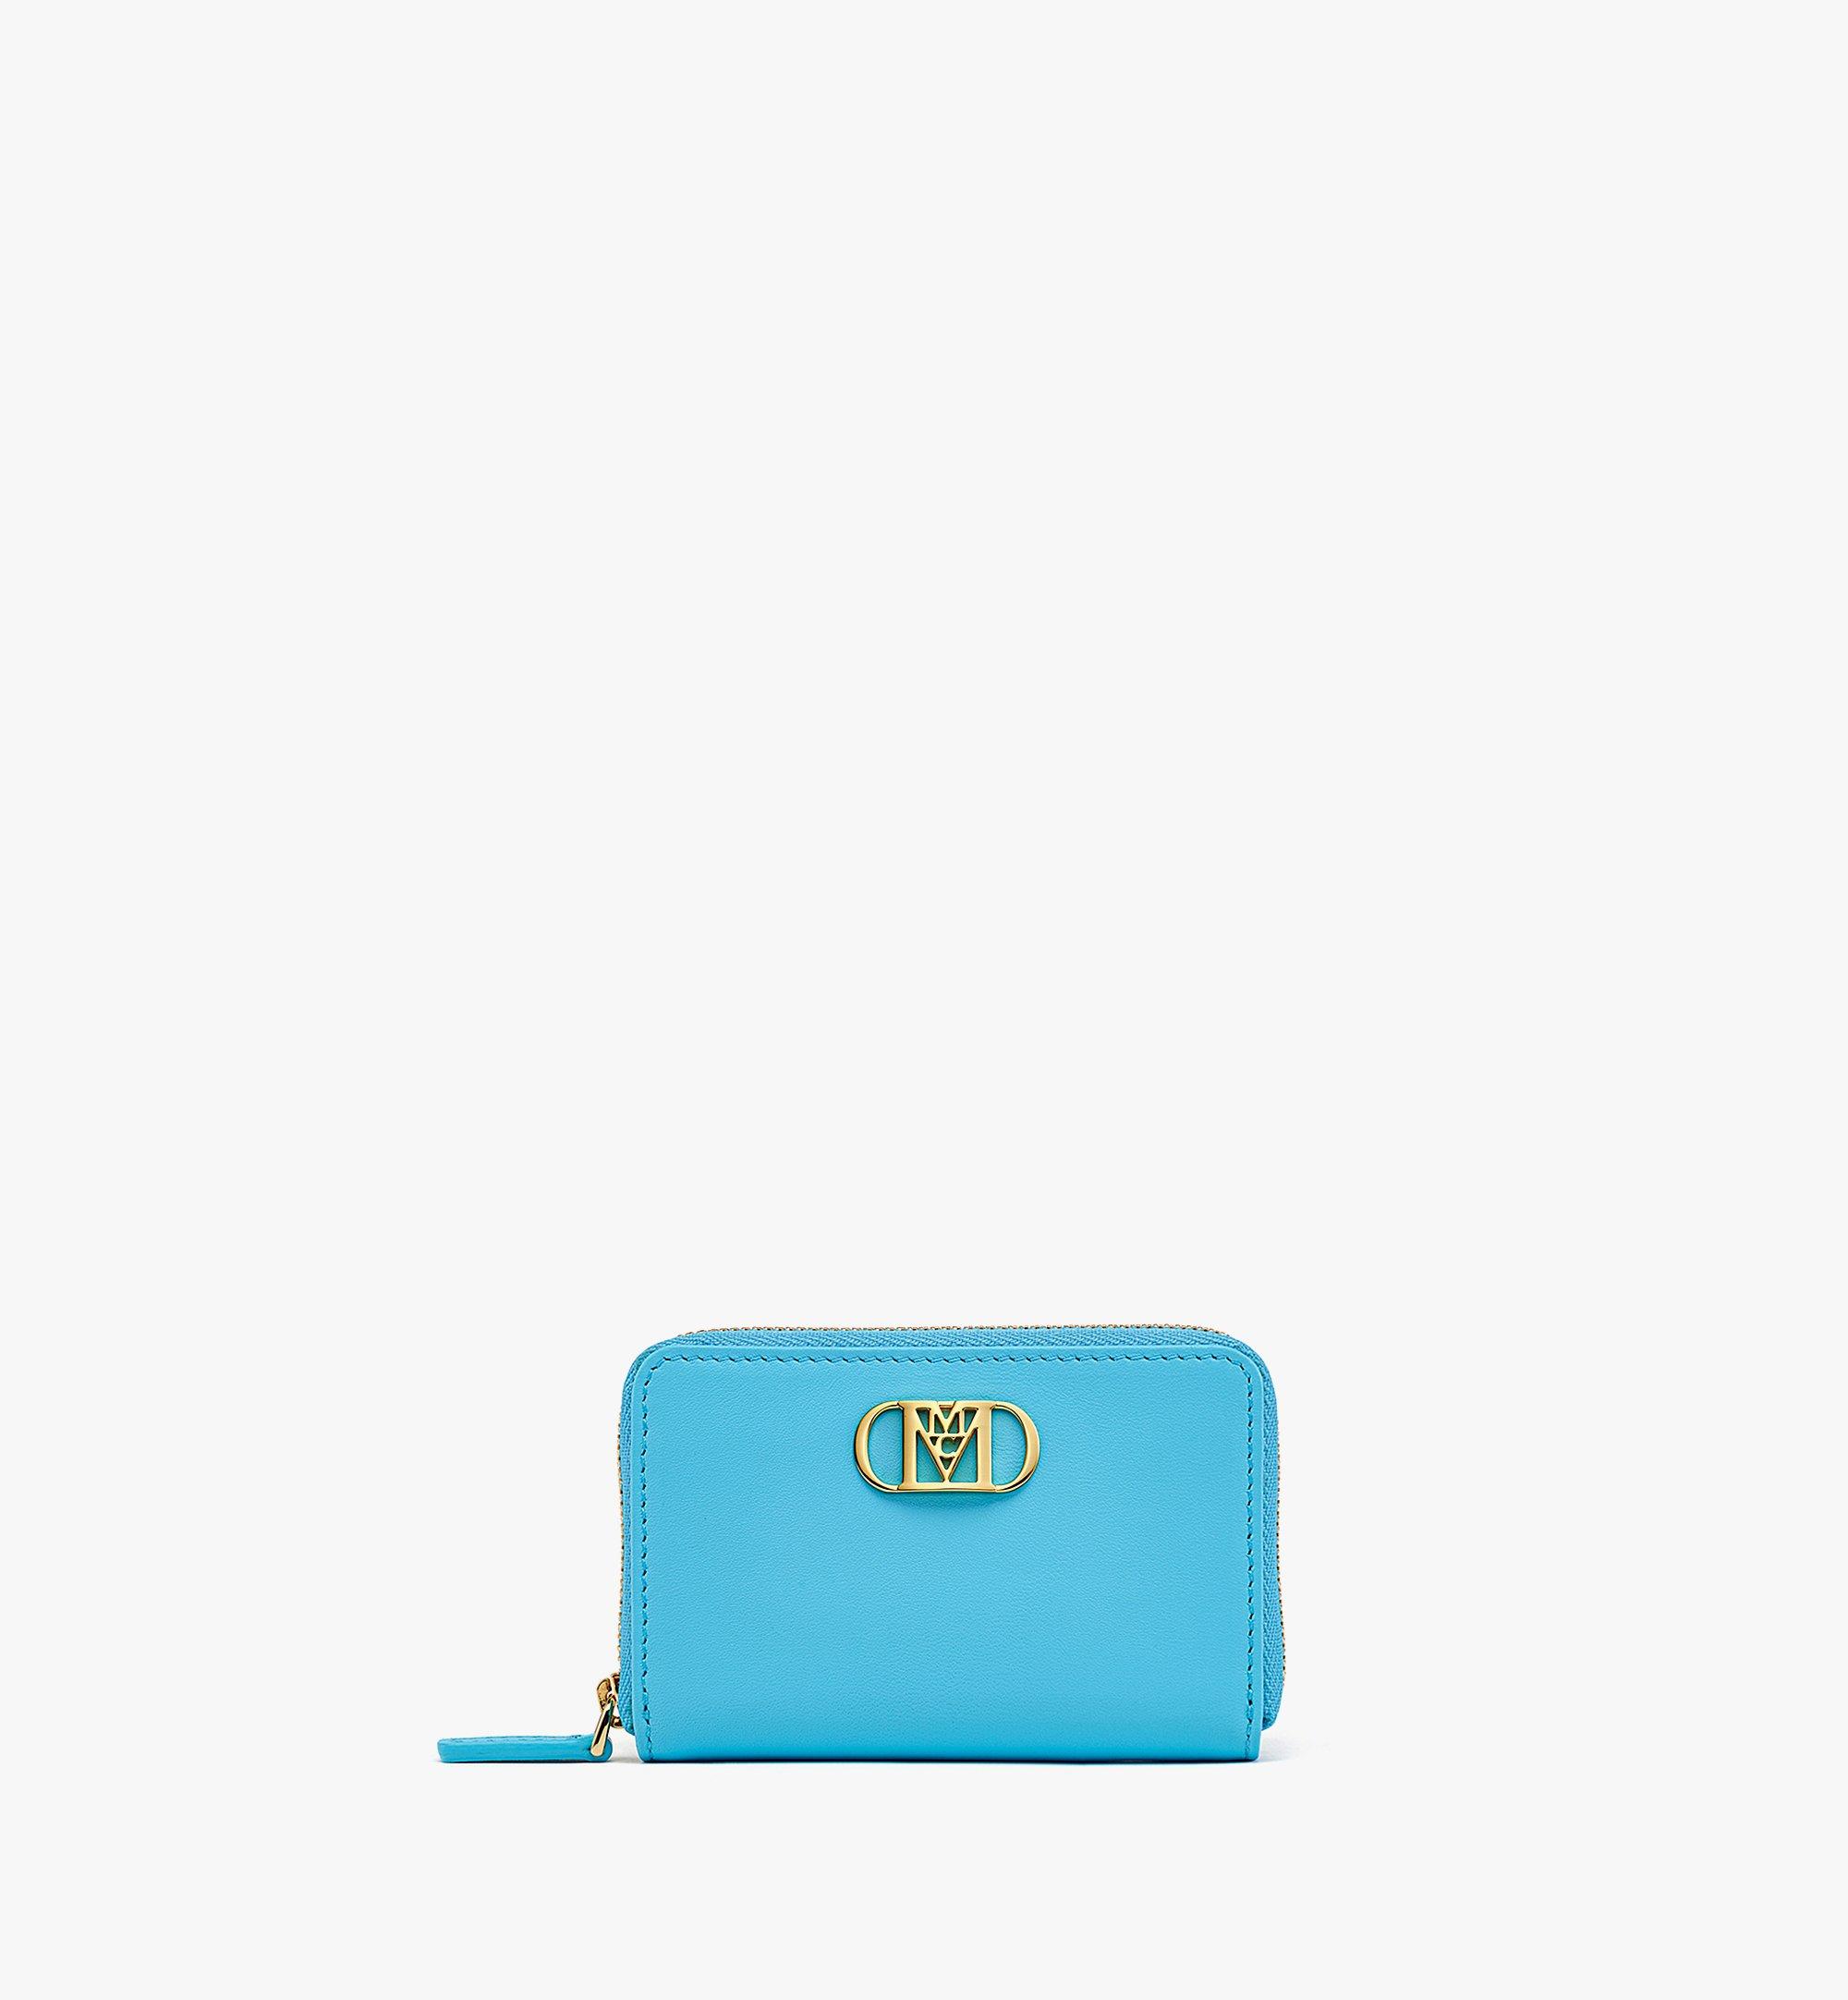 MCM กระเป๋าสตางค์ติดซิปรอบ Mode Travia ทำจากหนังแท้ของสเปน Blue MYLDSLD02L7001 มุมมองอื่น 1